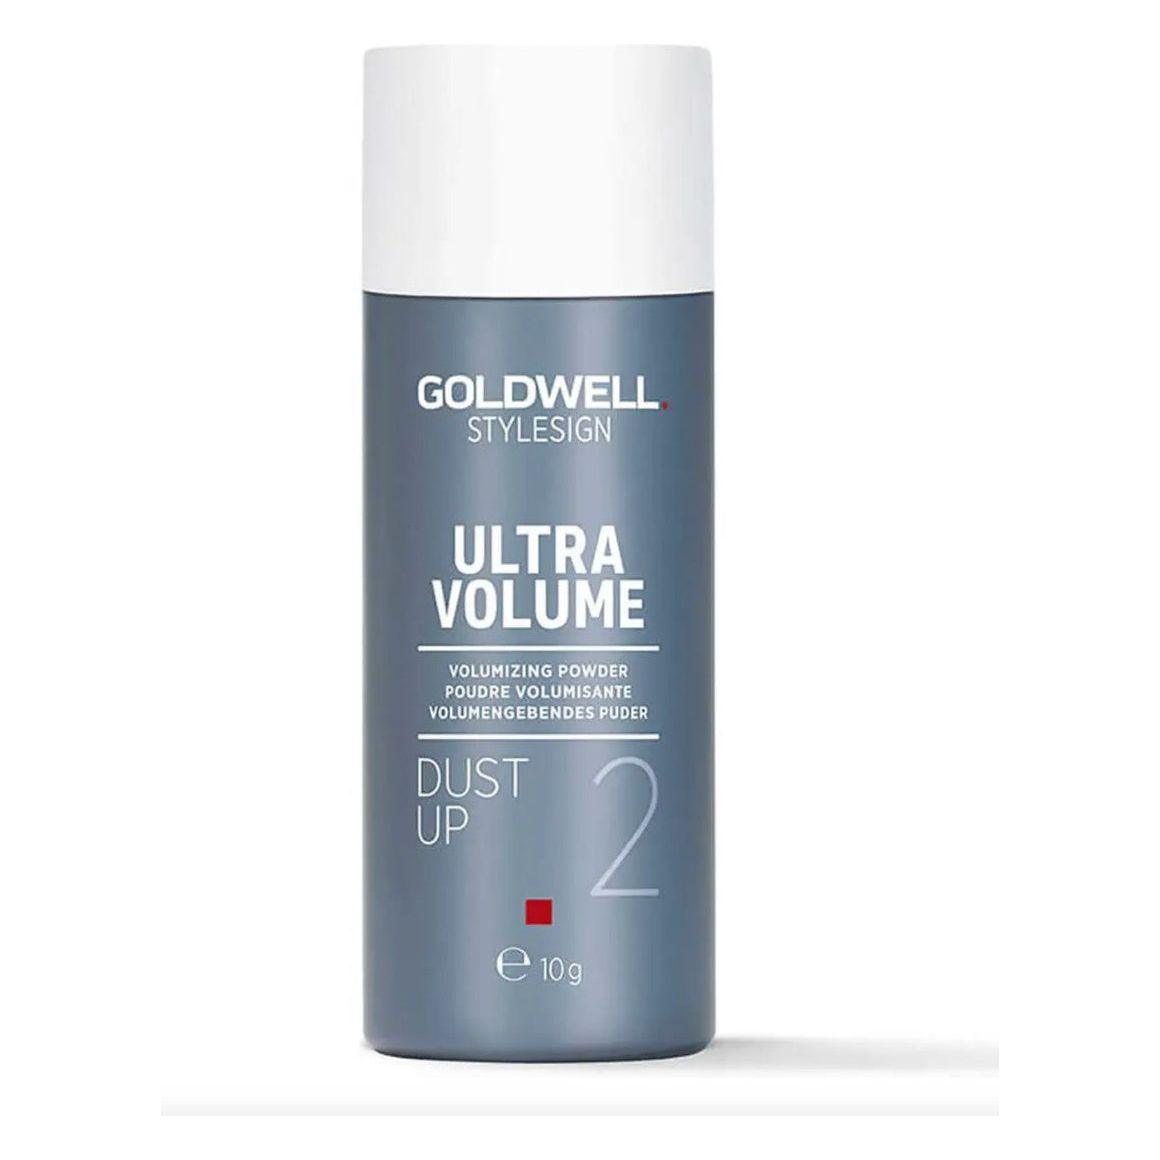 Goldwell Stylesign Ultra Volume Dust Up Volumizing Powder Goldwell Boutique Deauville